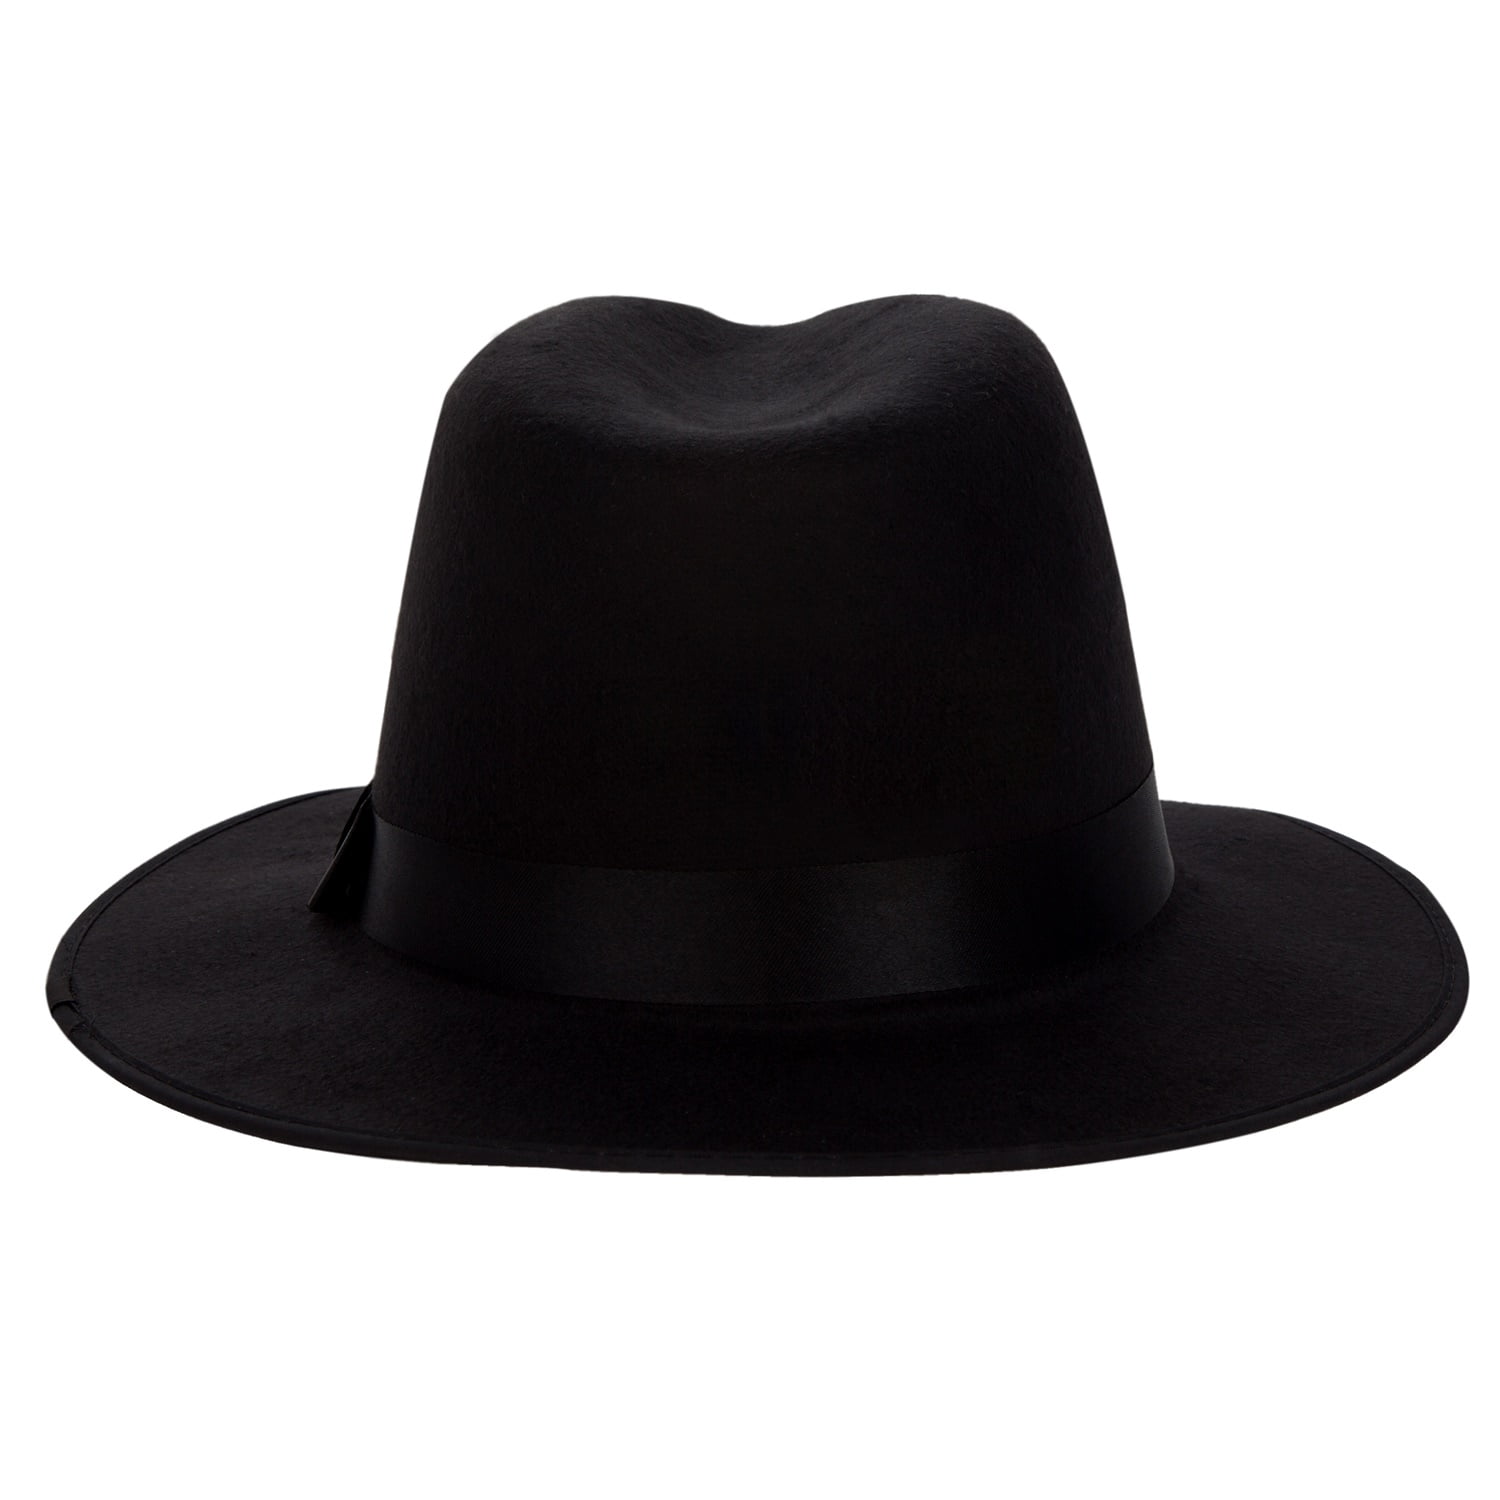 M Men's Black Wool Felt Wide Brim Safari Fedora Hat Cap Black 